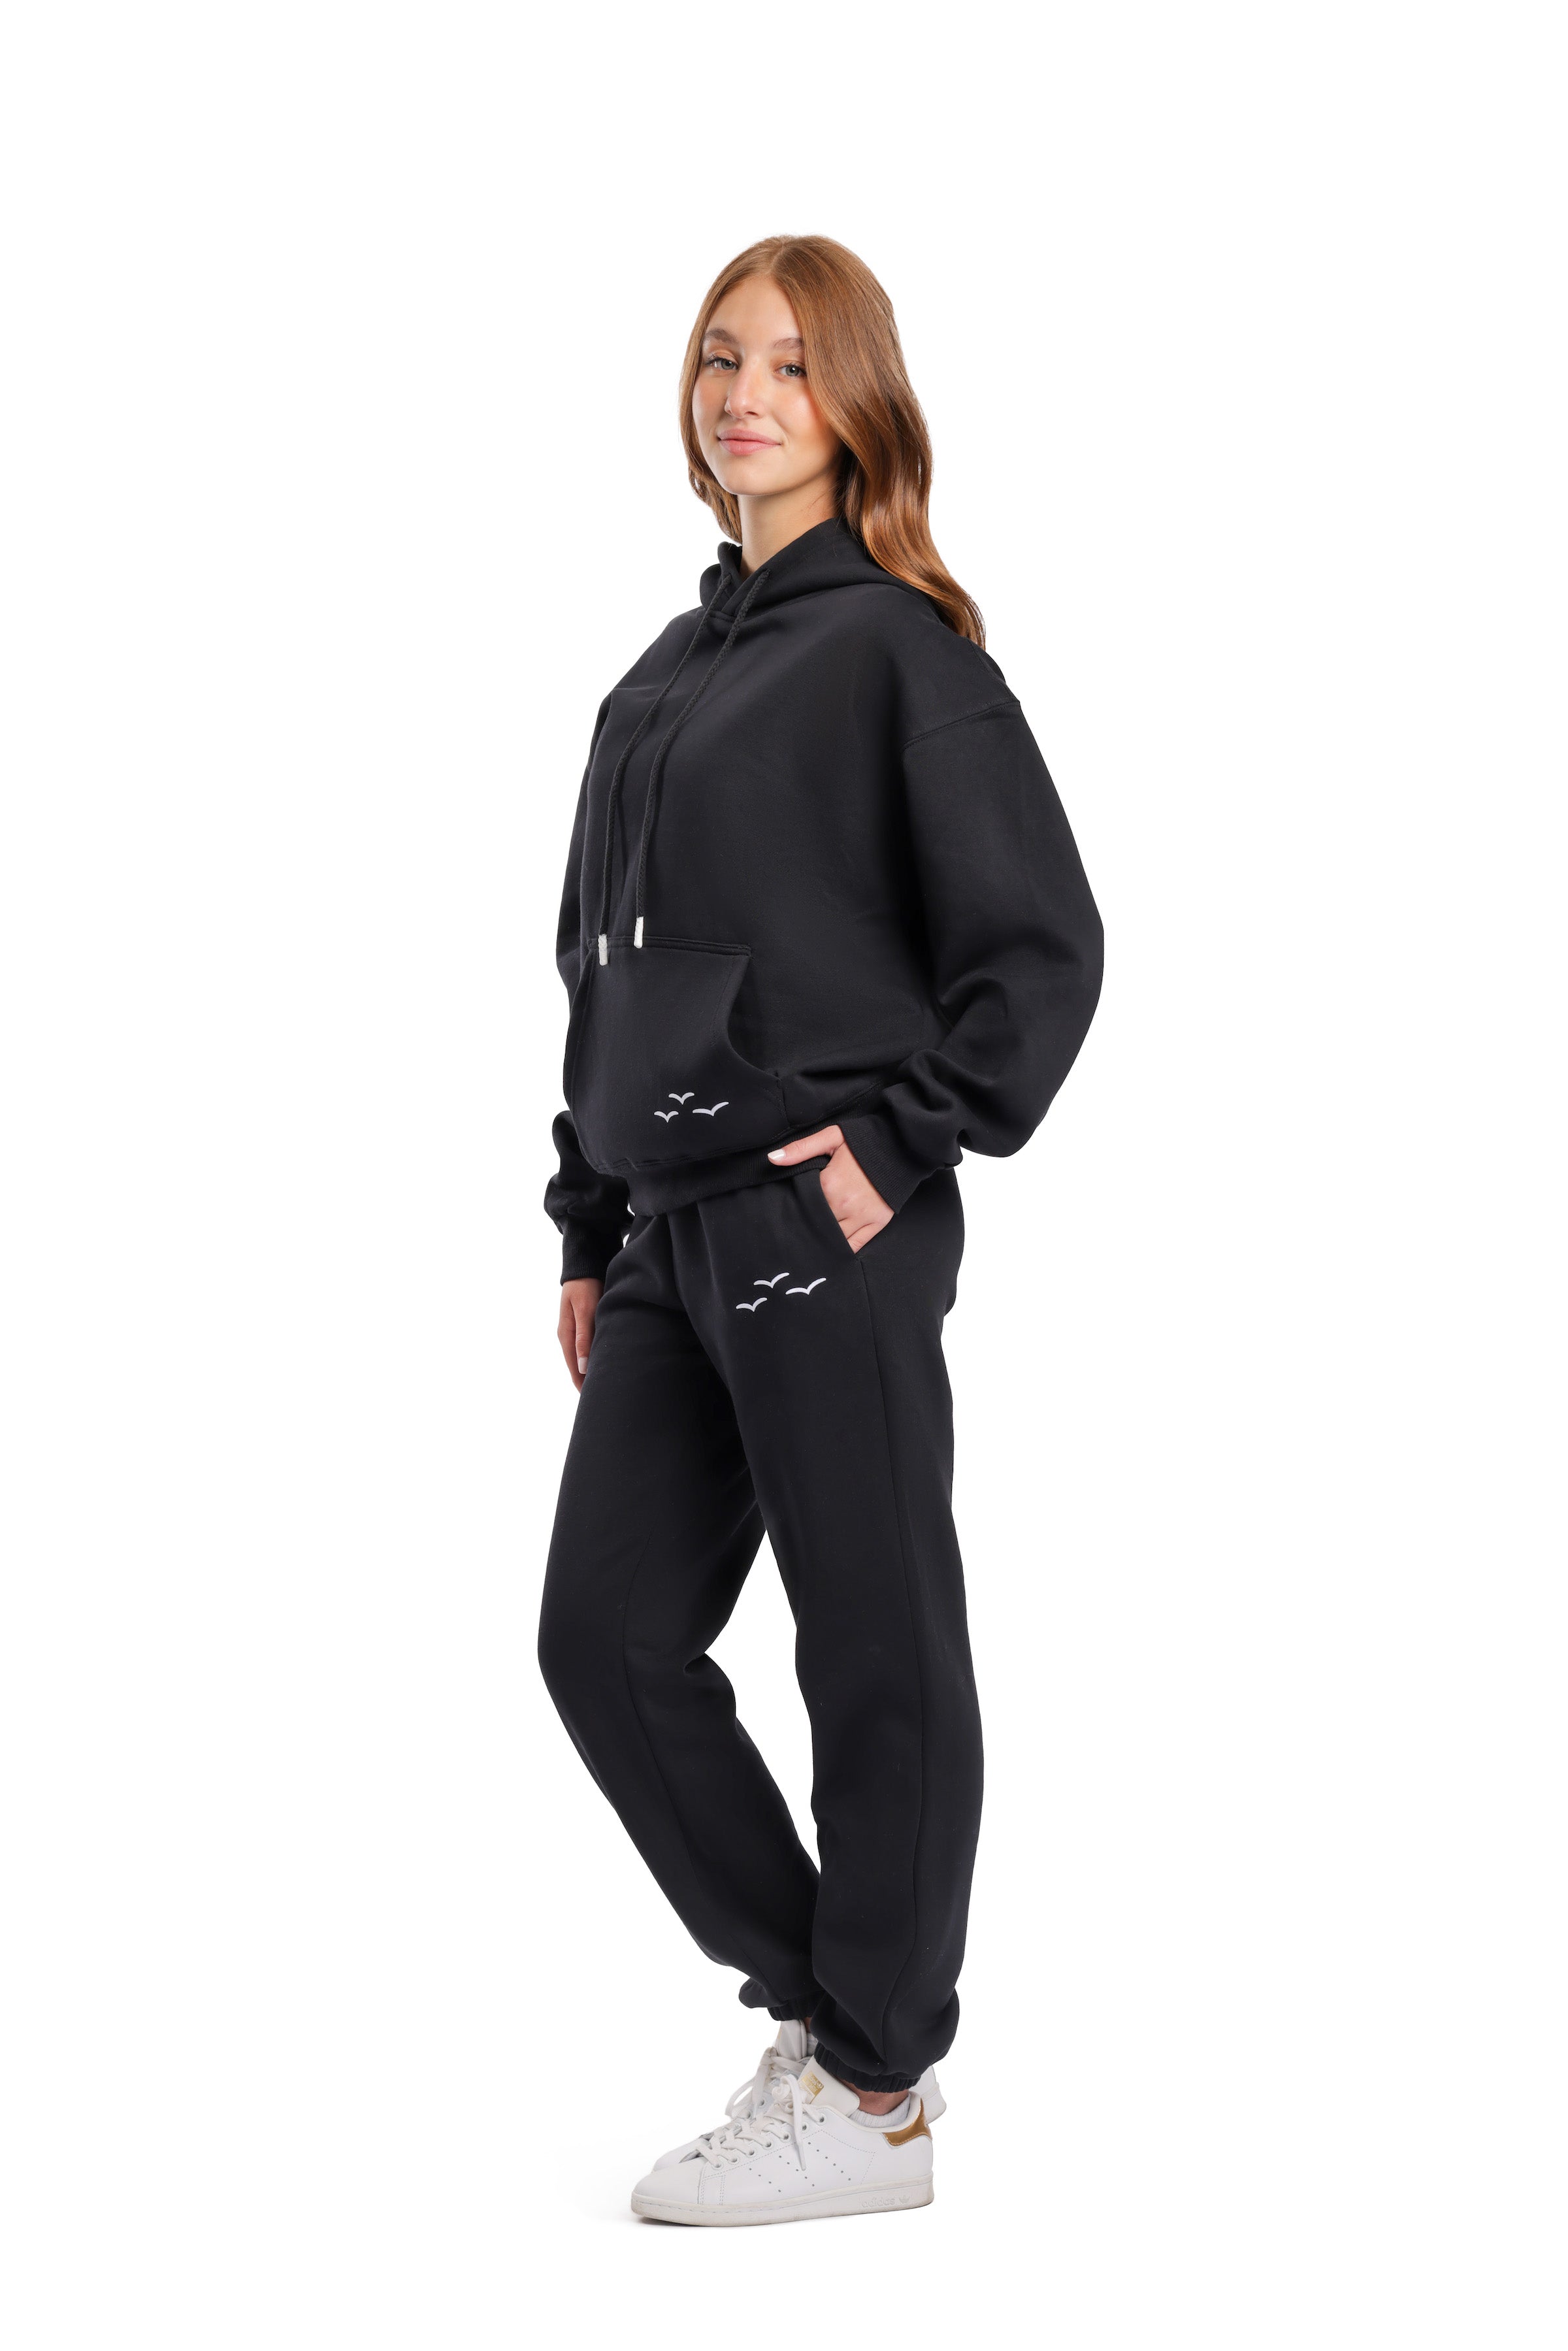 Women's tracksuit set in black